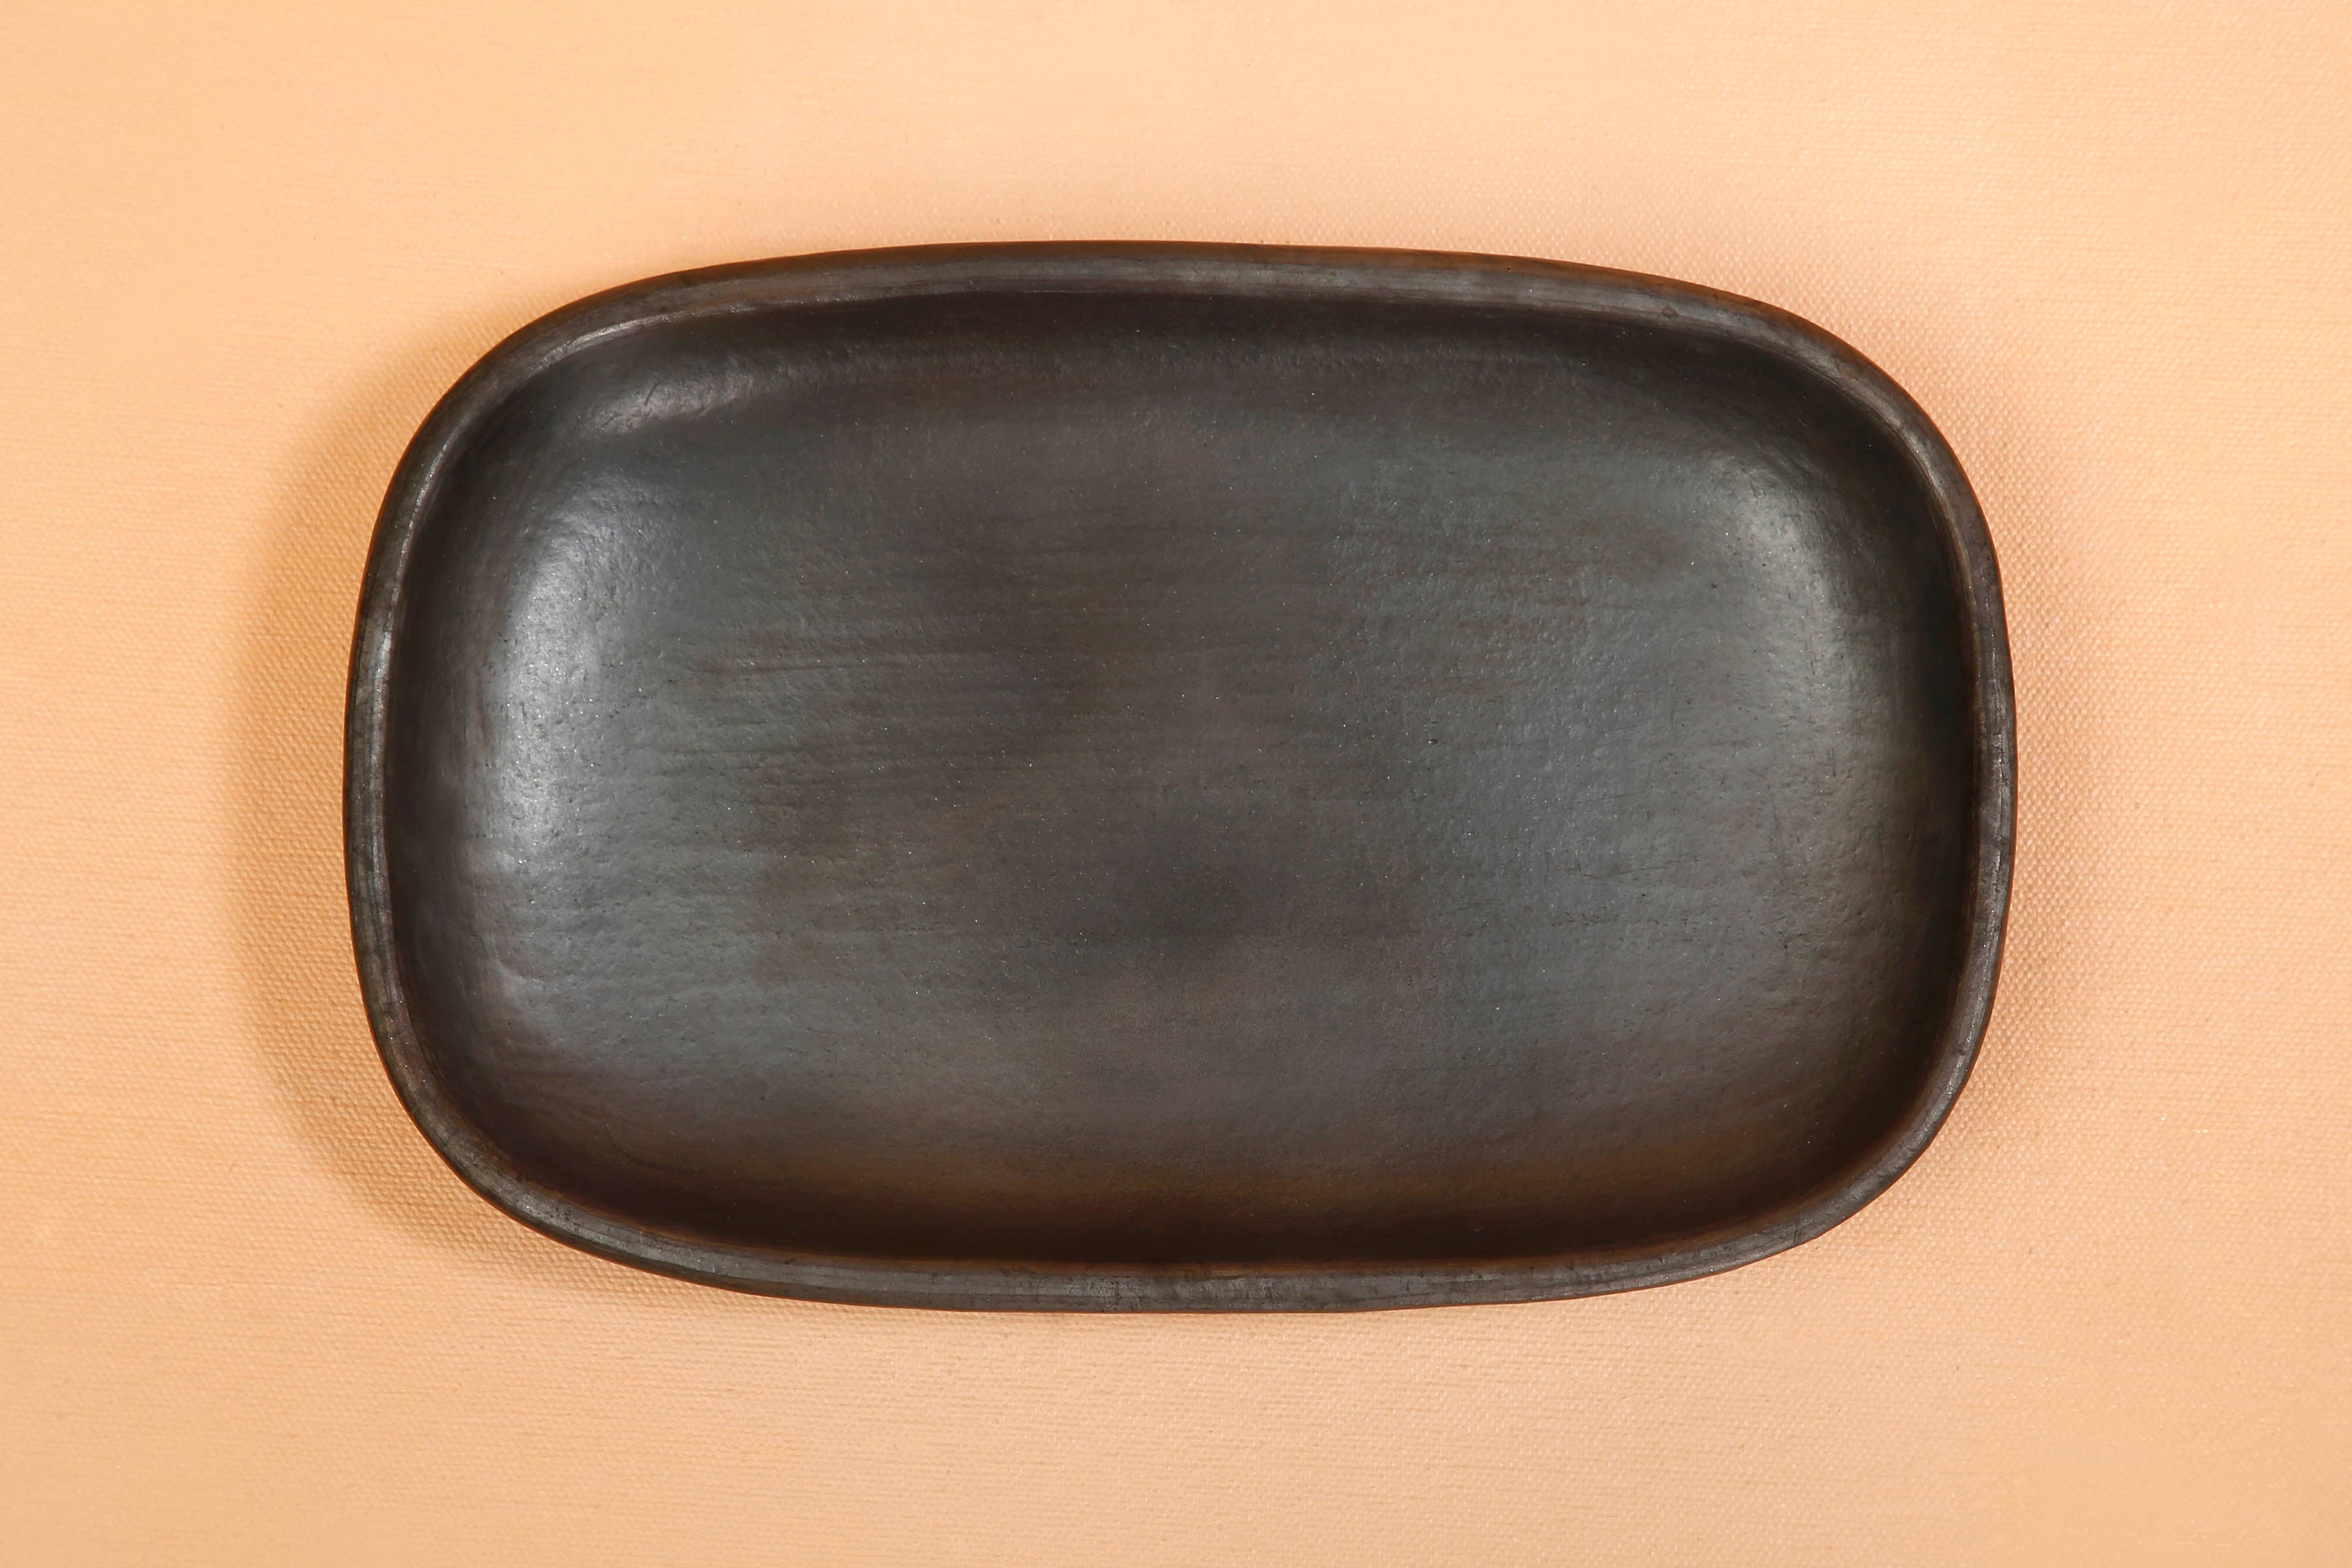 Earthenware Clay Longpi Pottery Platter - 9"x6"x1.5"